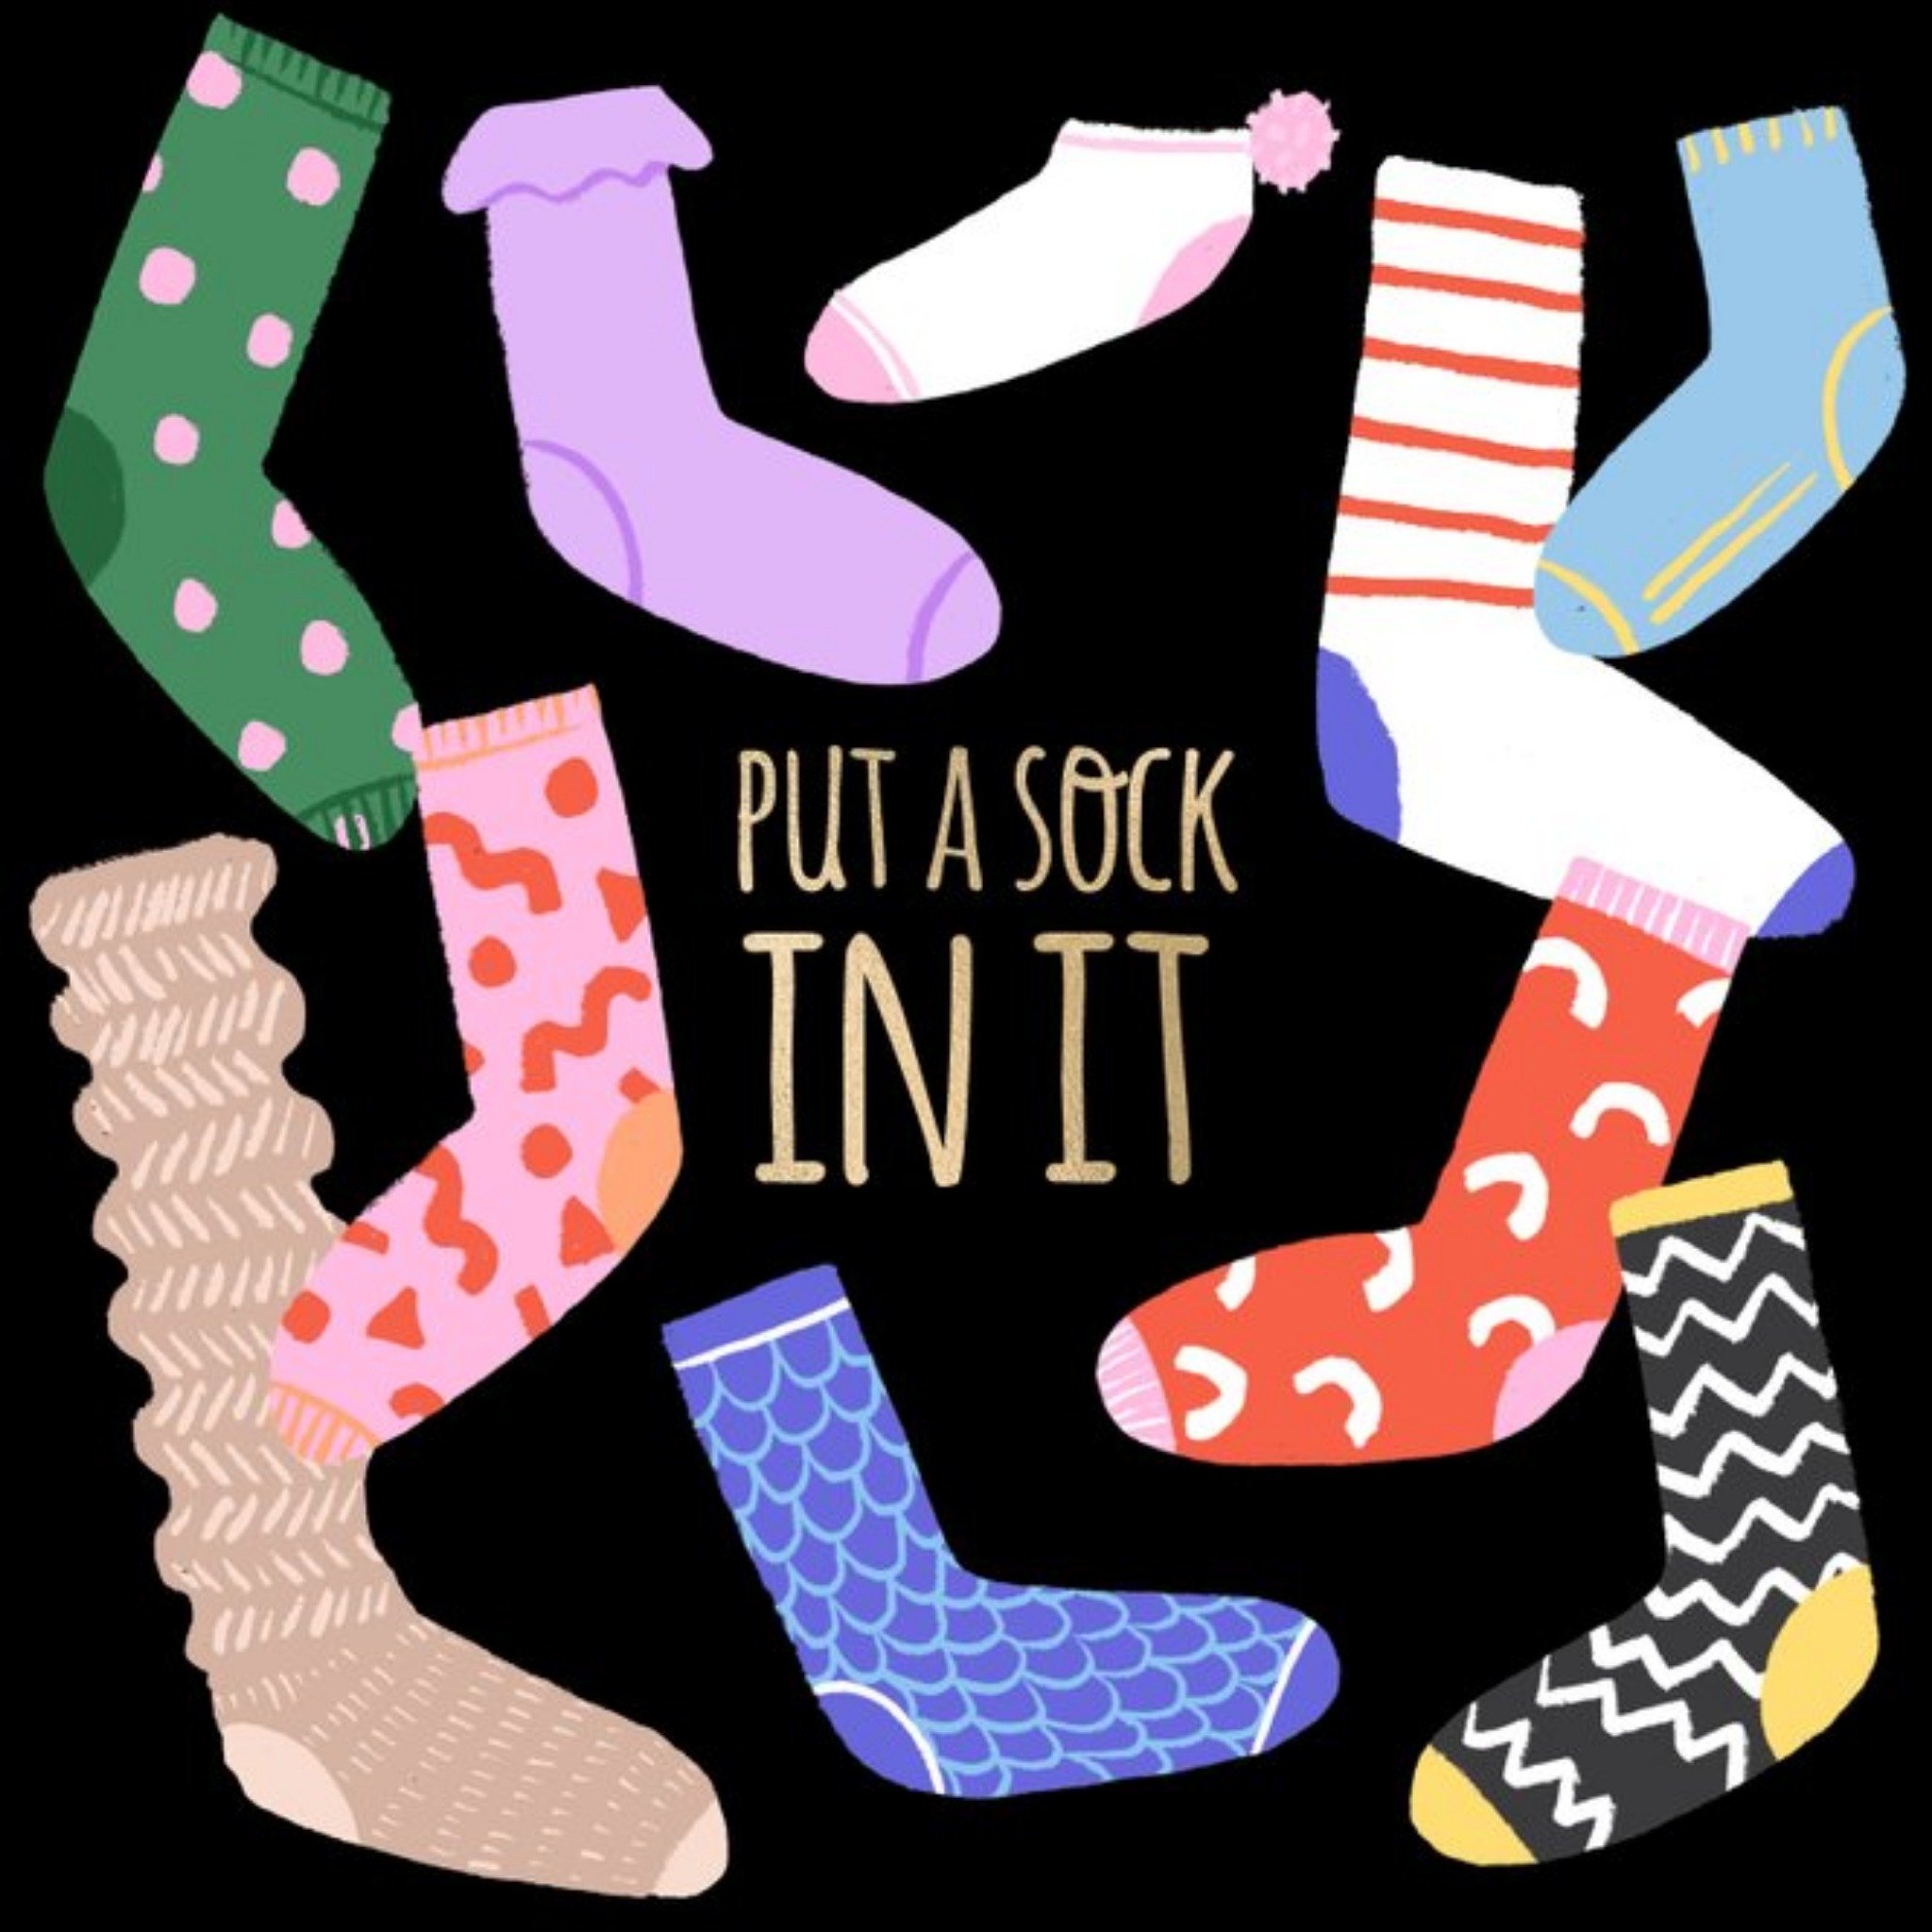 Moonpig Brook Gossen Illustrated Socks Cheeky Put A Sock In It Card, Square